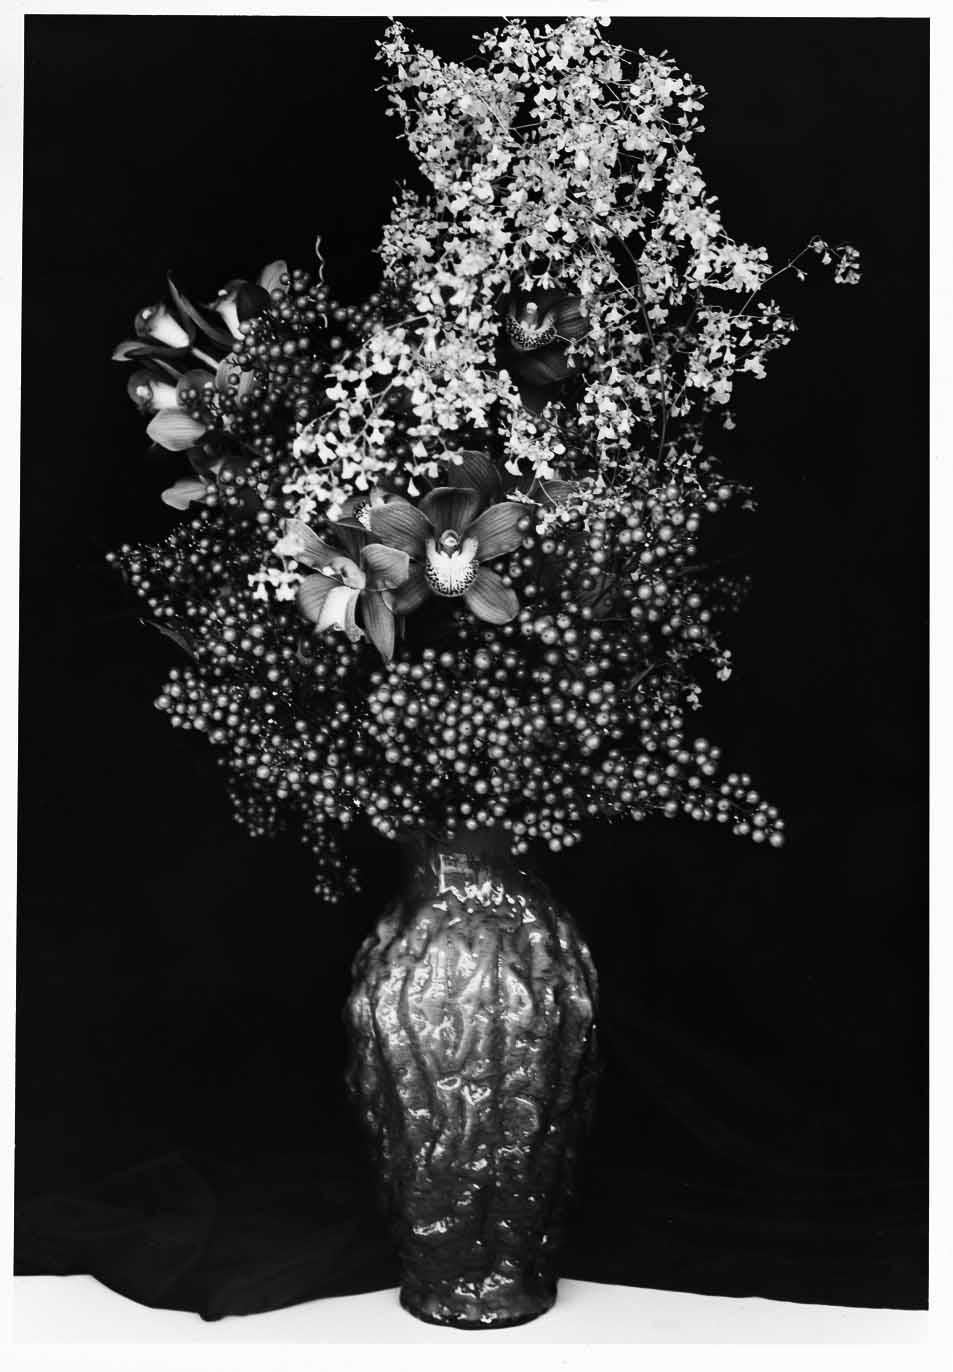 69YK #55 - Nobuyoshi Araki, Japanische Fotografie, Akt, Schwarz-Weiß, Kunst